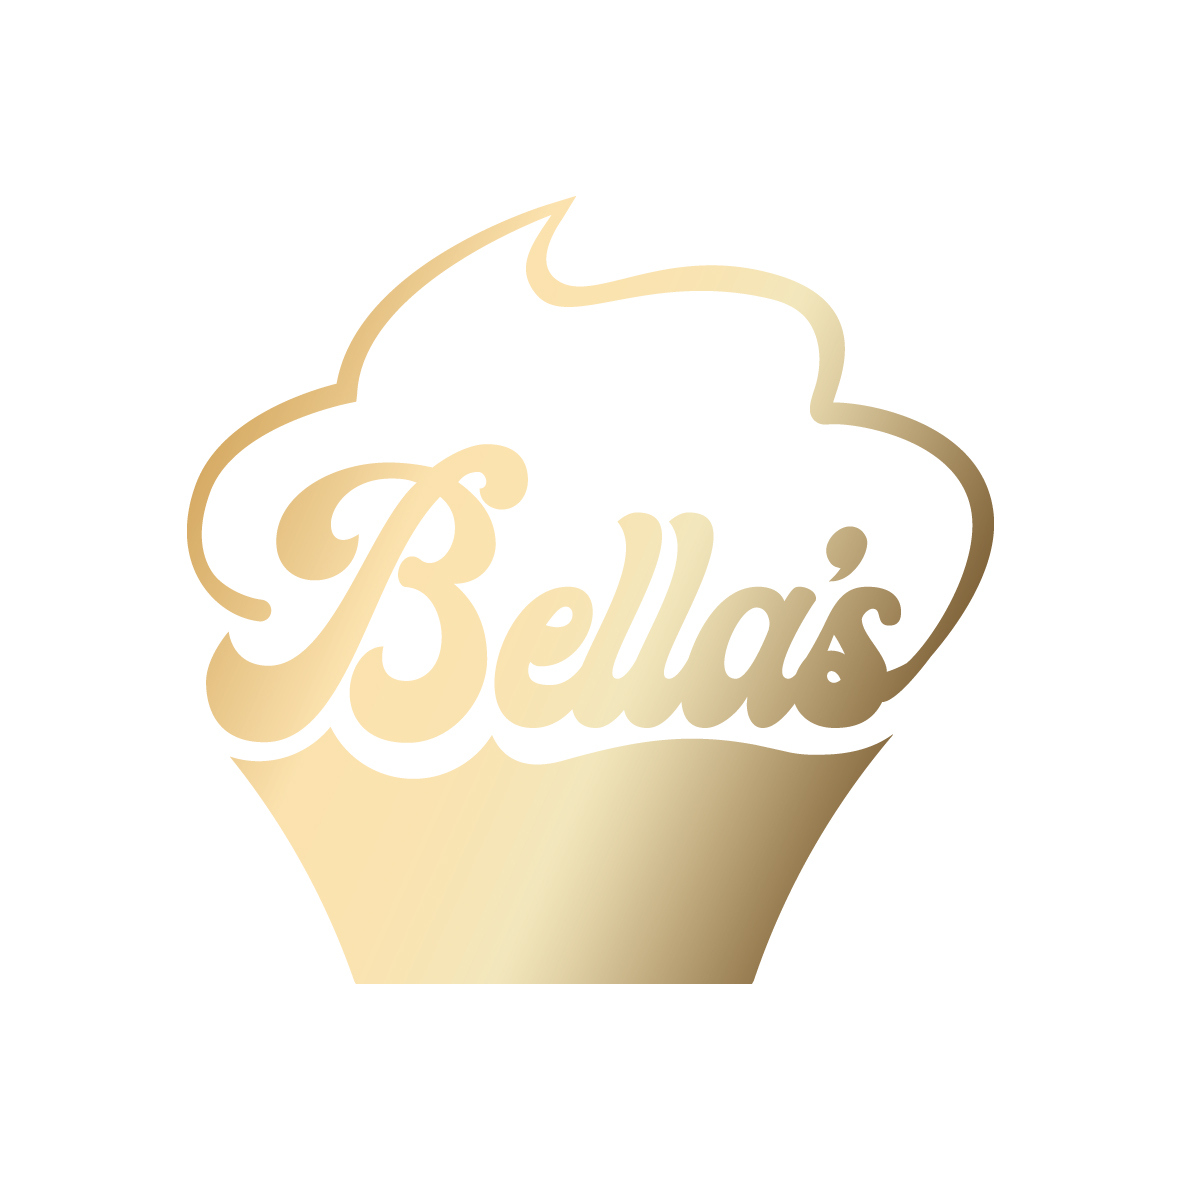 Bella's